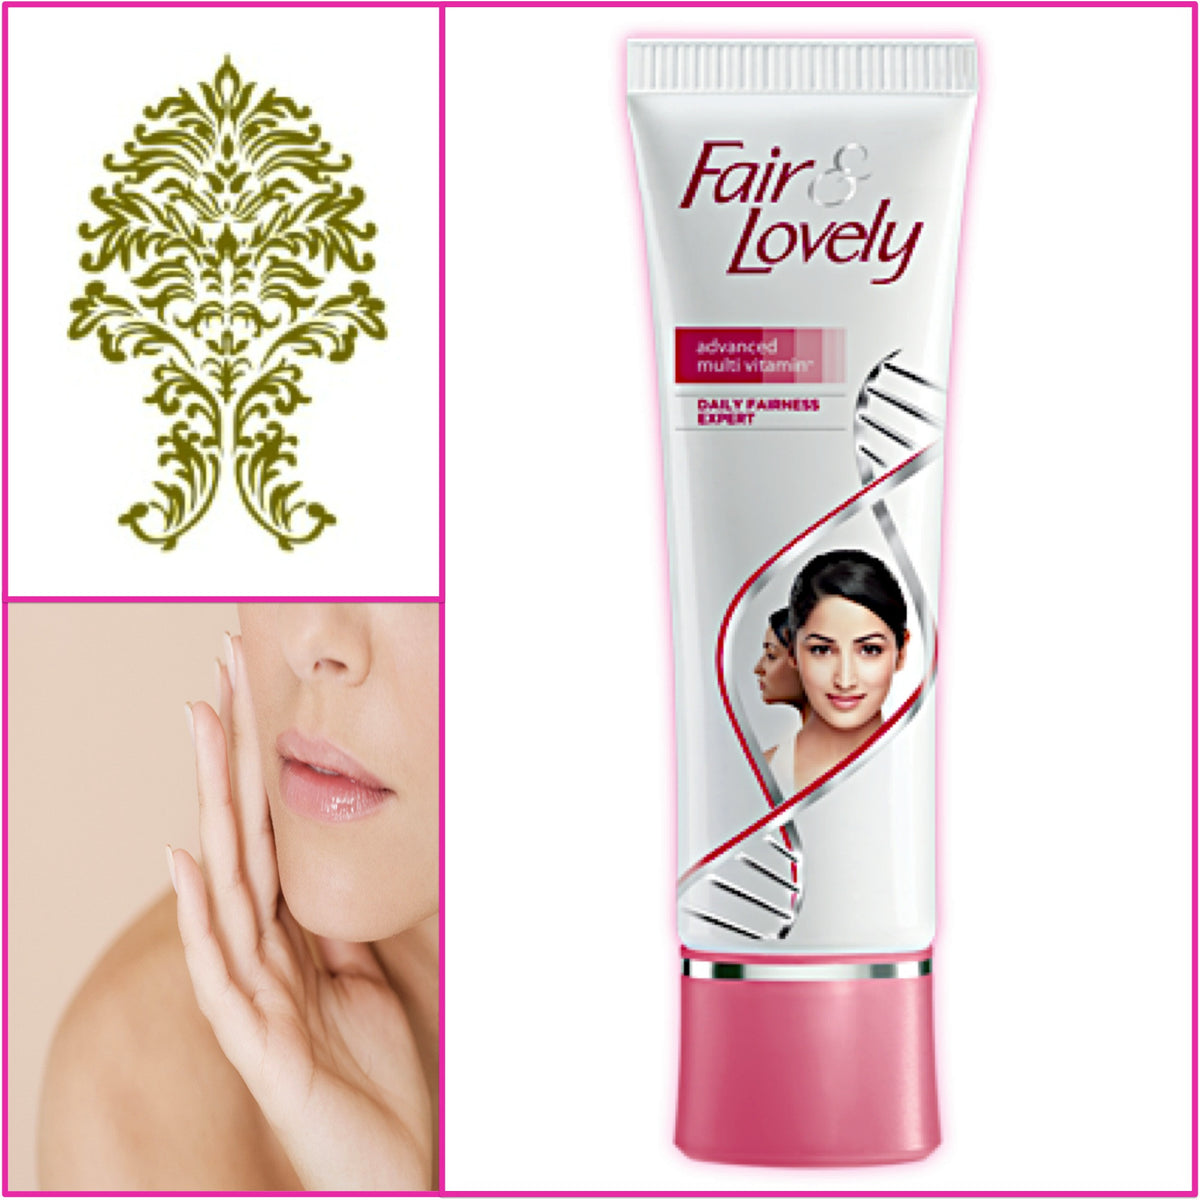 Fair & Lovely Advanced Multi-Vitamin Cream - Daily Fairness Expert 50g